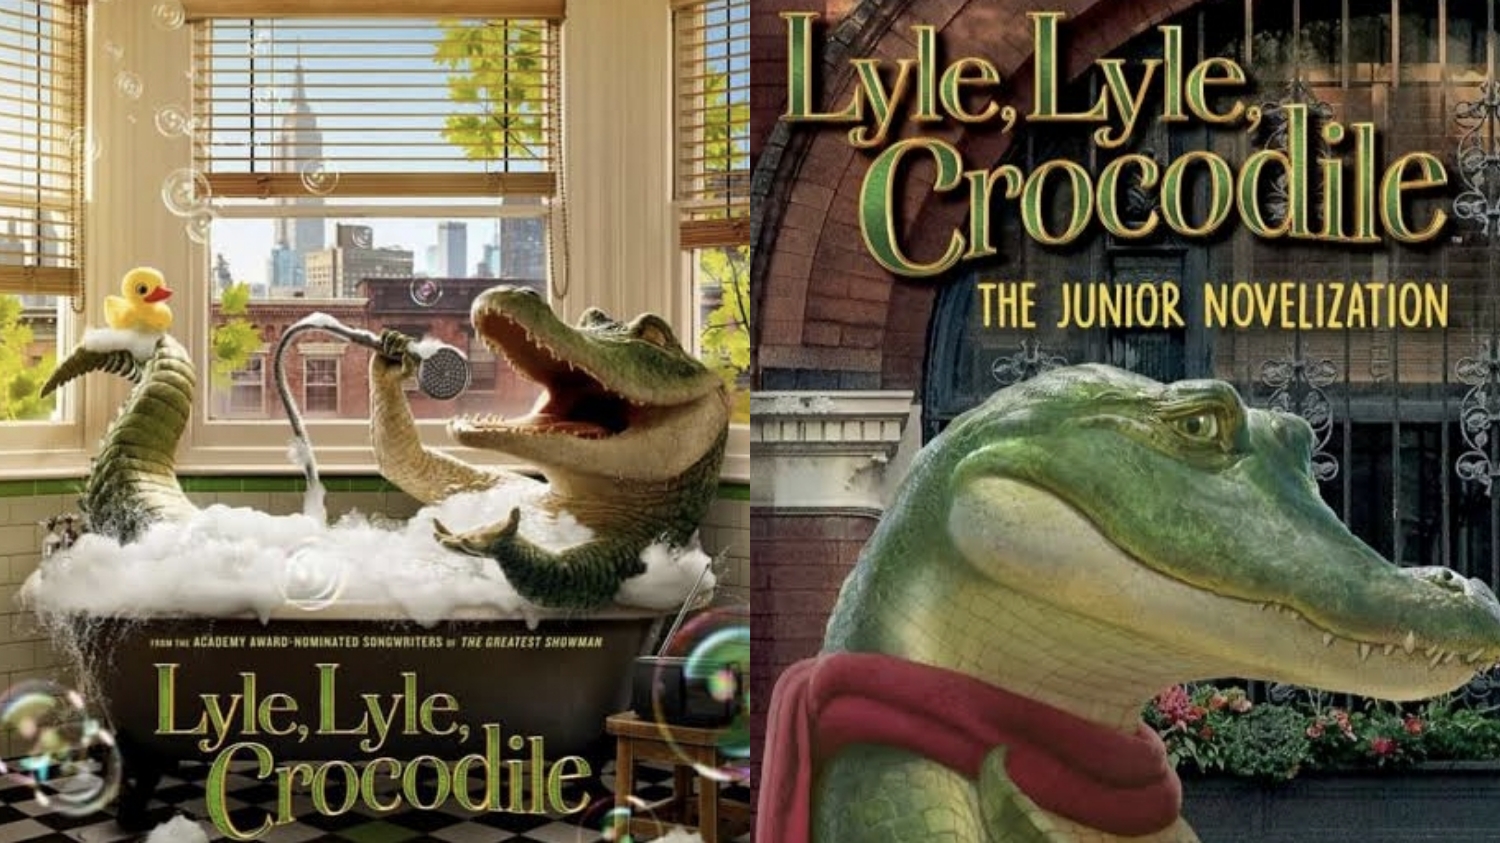 Yuk intip Sinopsis Film Lyle Lyle Crocodile, Kisah Seekor Buaya yang Bisa Bernyanyi